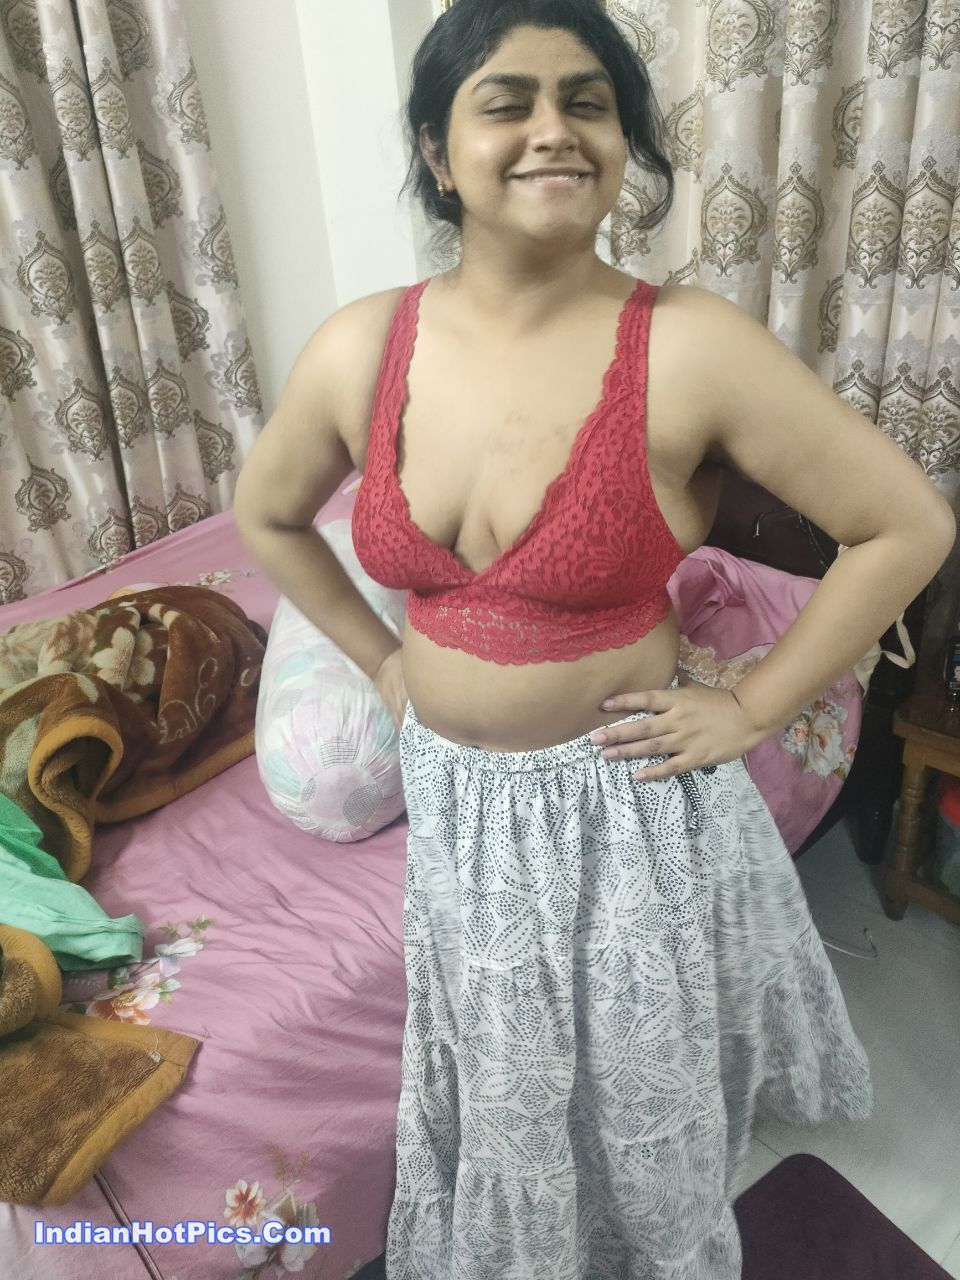 Indian Wife Ka Blowjob Aur Sex Pictures pic image